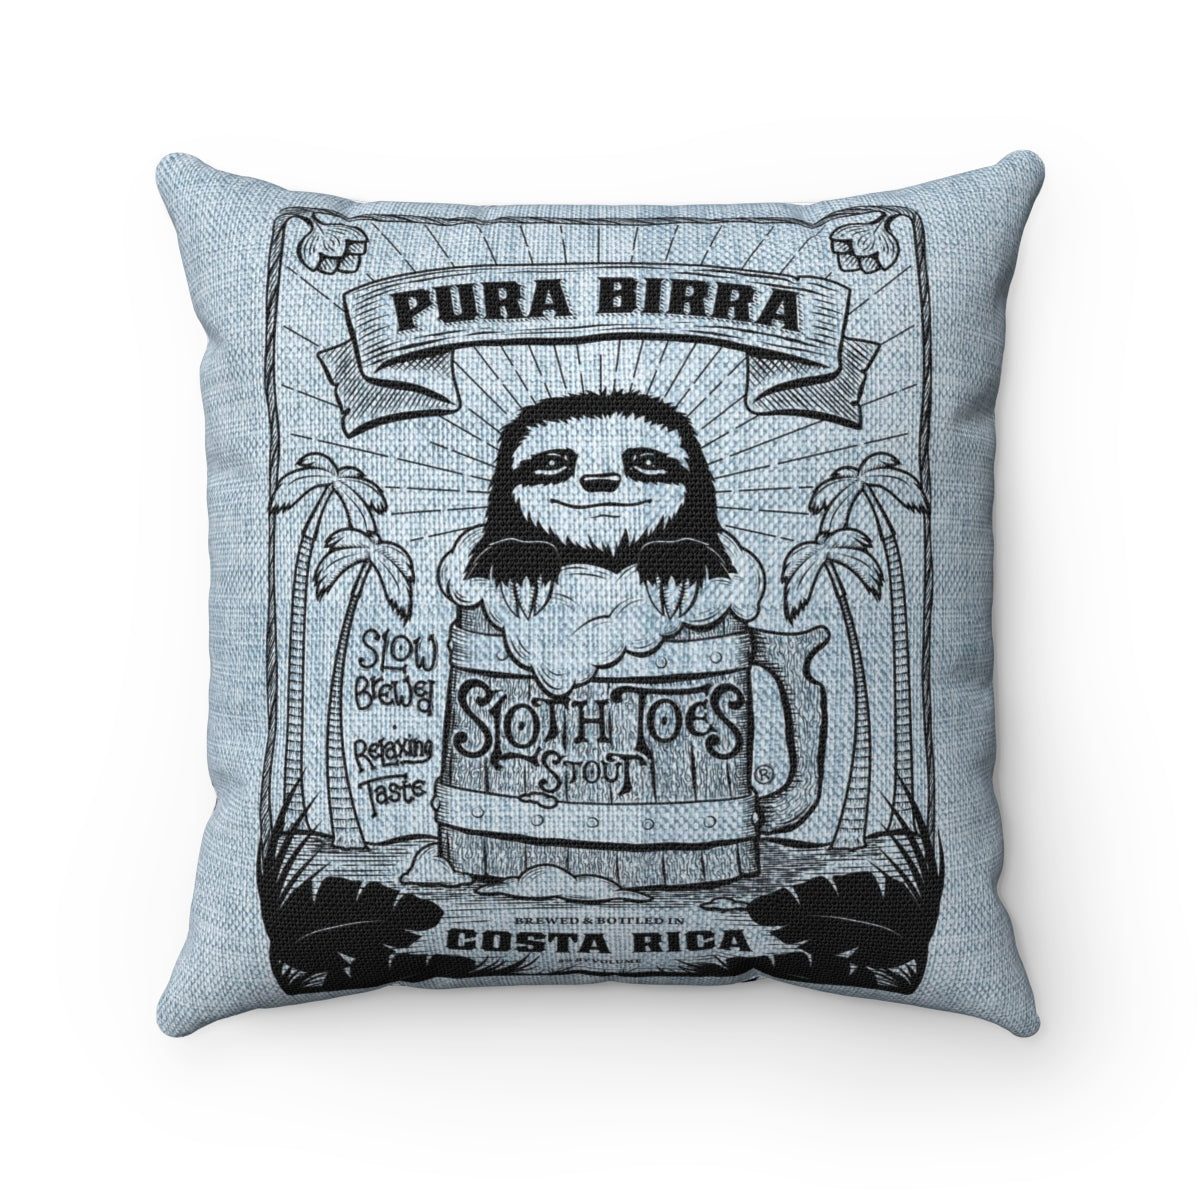 Pura Birra Pillow with Insert